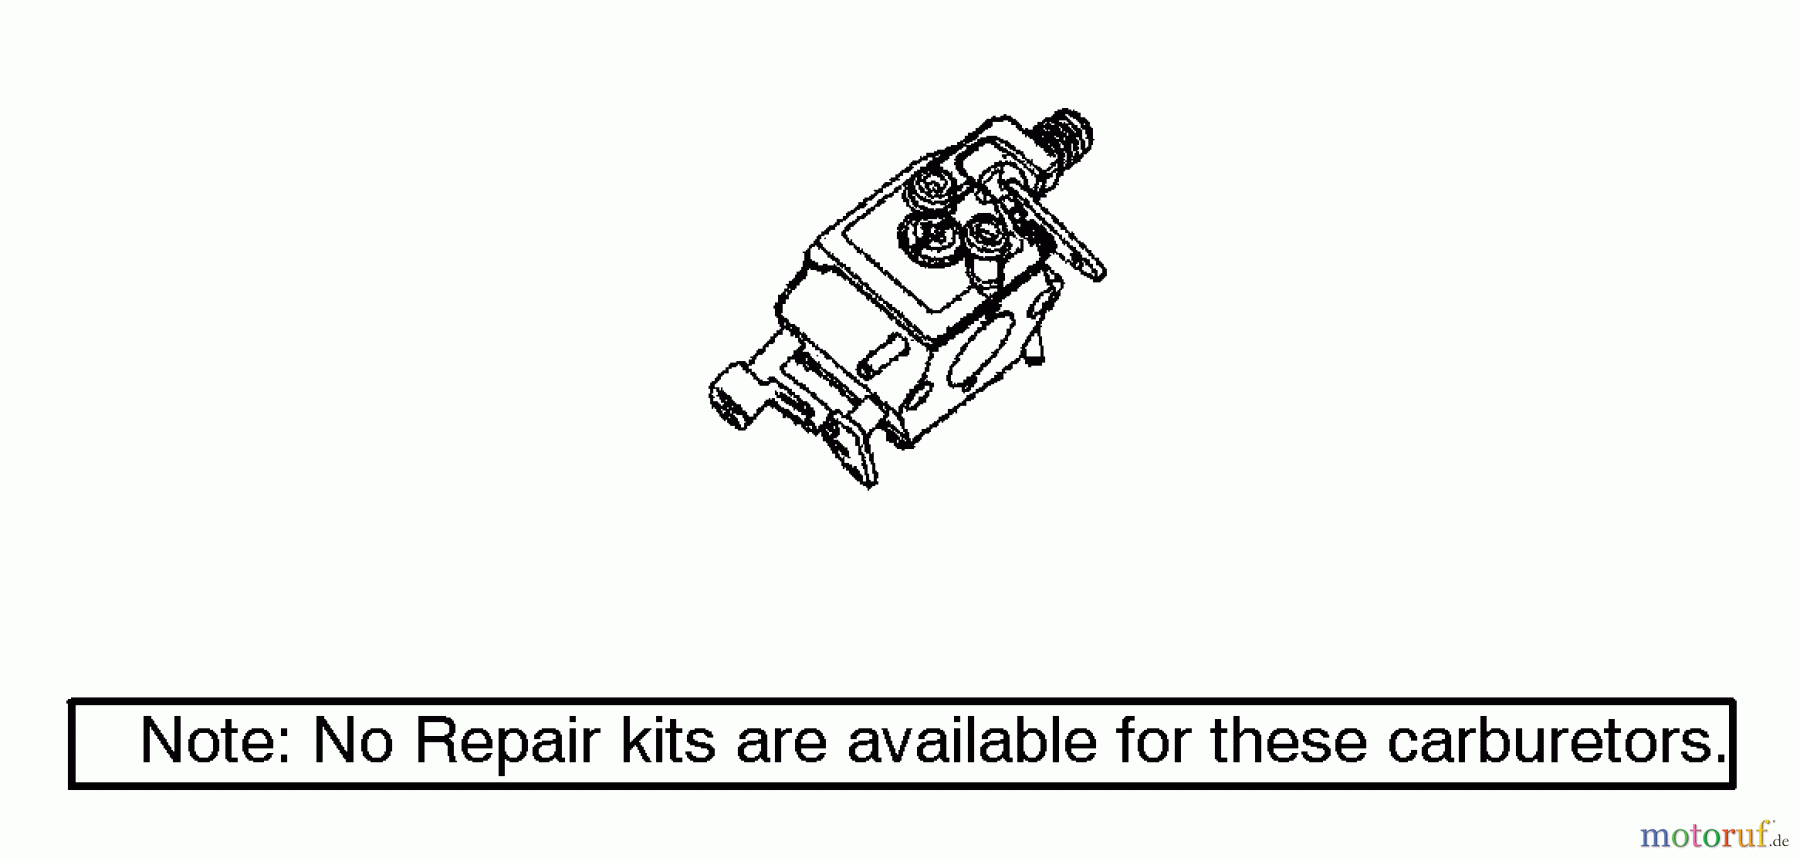  Poulan / Weed Eater Motorsägen 2150 (Type 1) - Poulan Woodshark / Woodsman Chainsaw Carburetor Assembly Kits 530071620/530071820/530071821